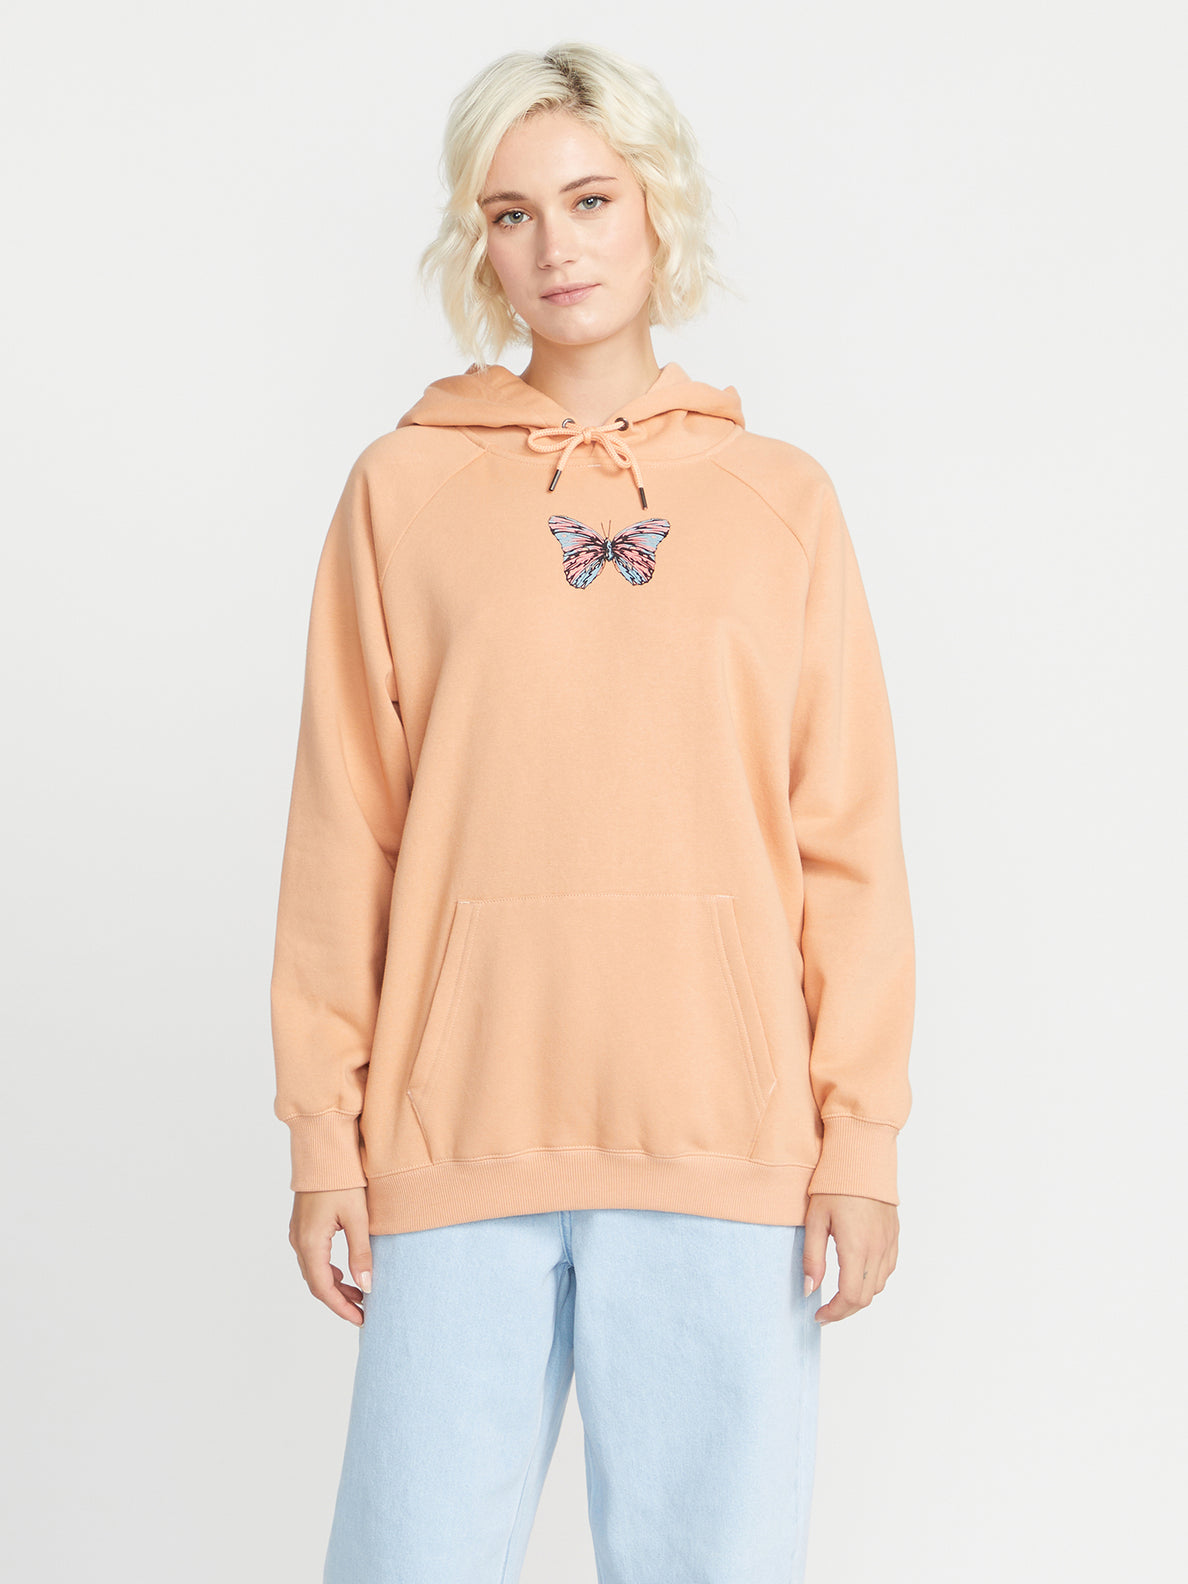 Truly Stoked Boyfriend Pullover Sweatshirt - Clay (B4132303_CLY) [F]